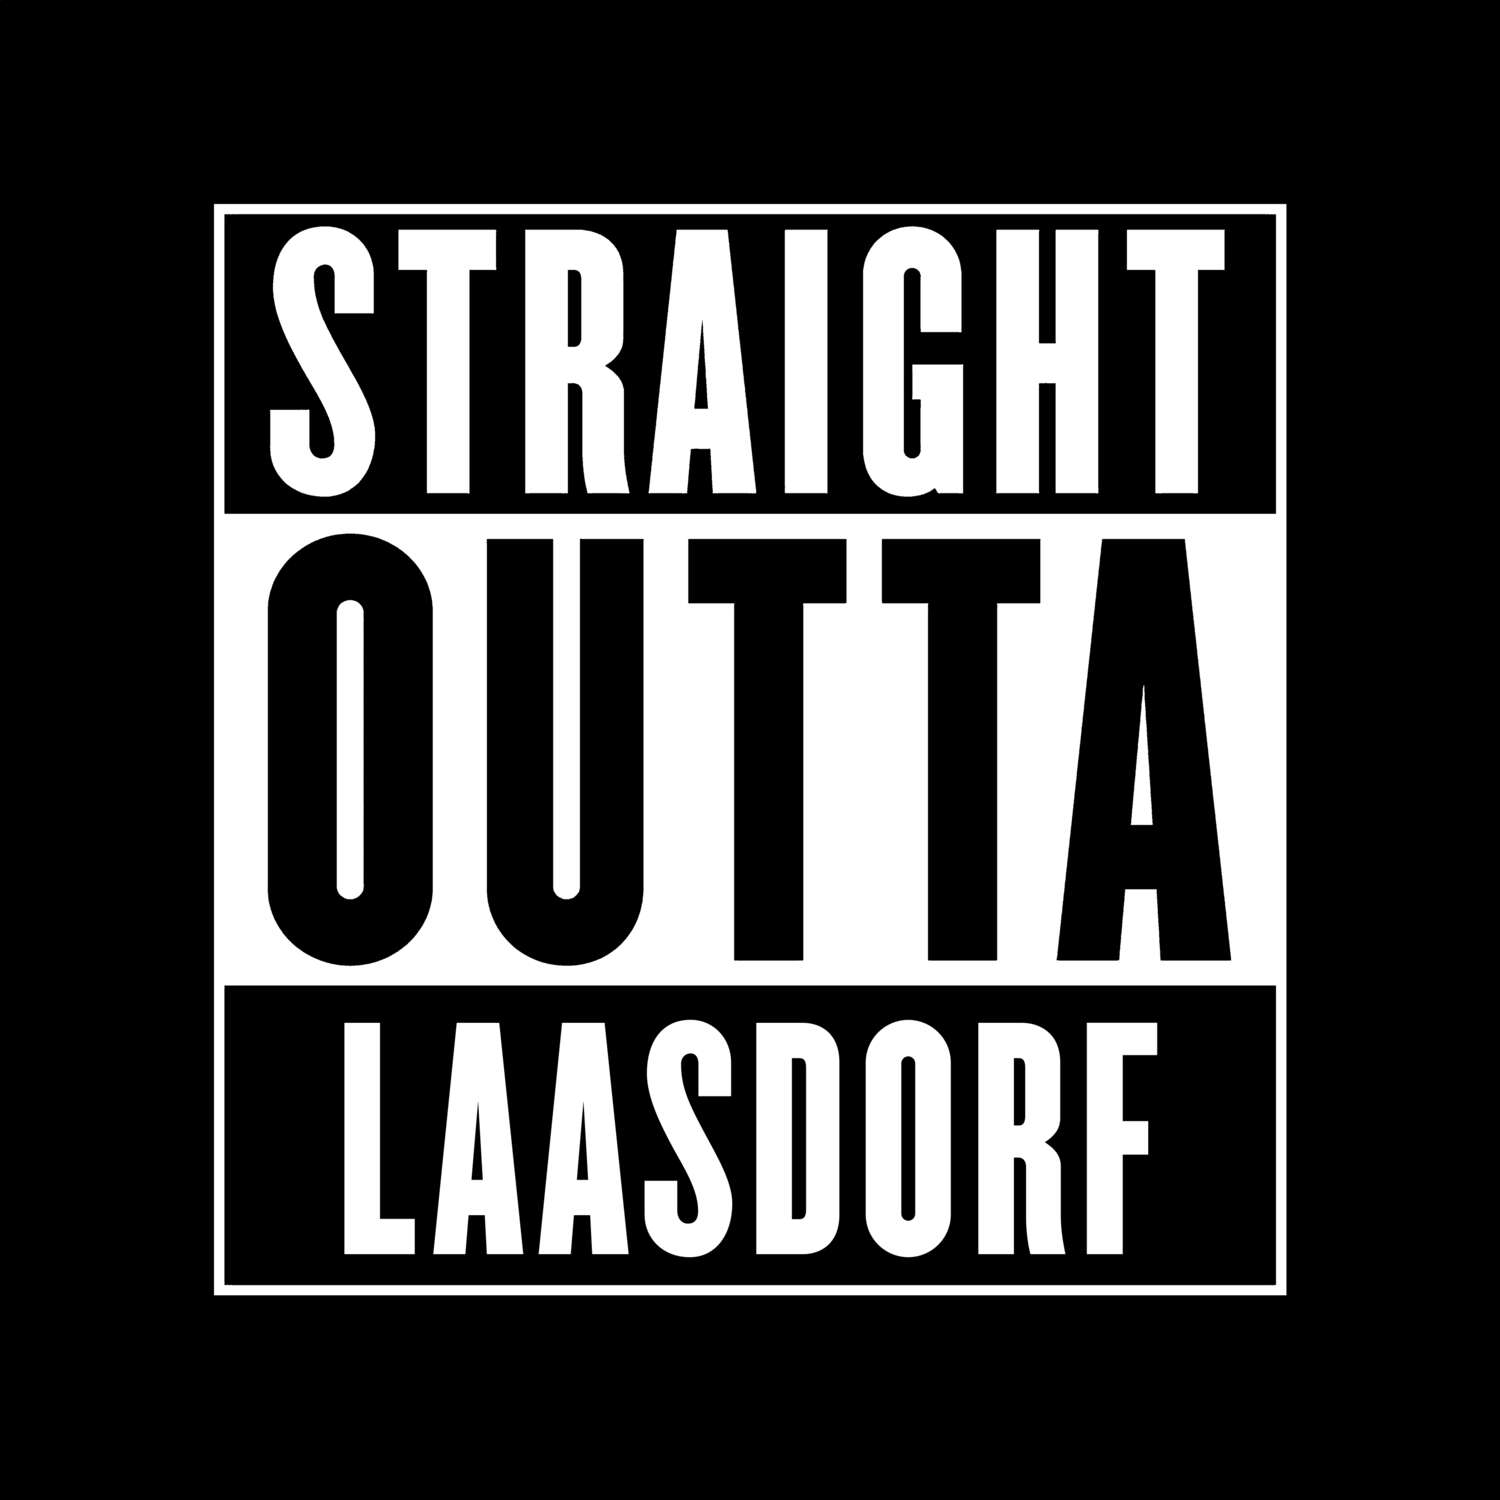 Laasdorf T-Shirt »Straight Outta«